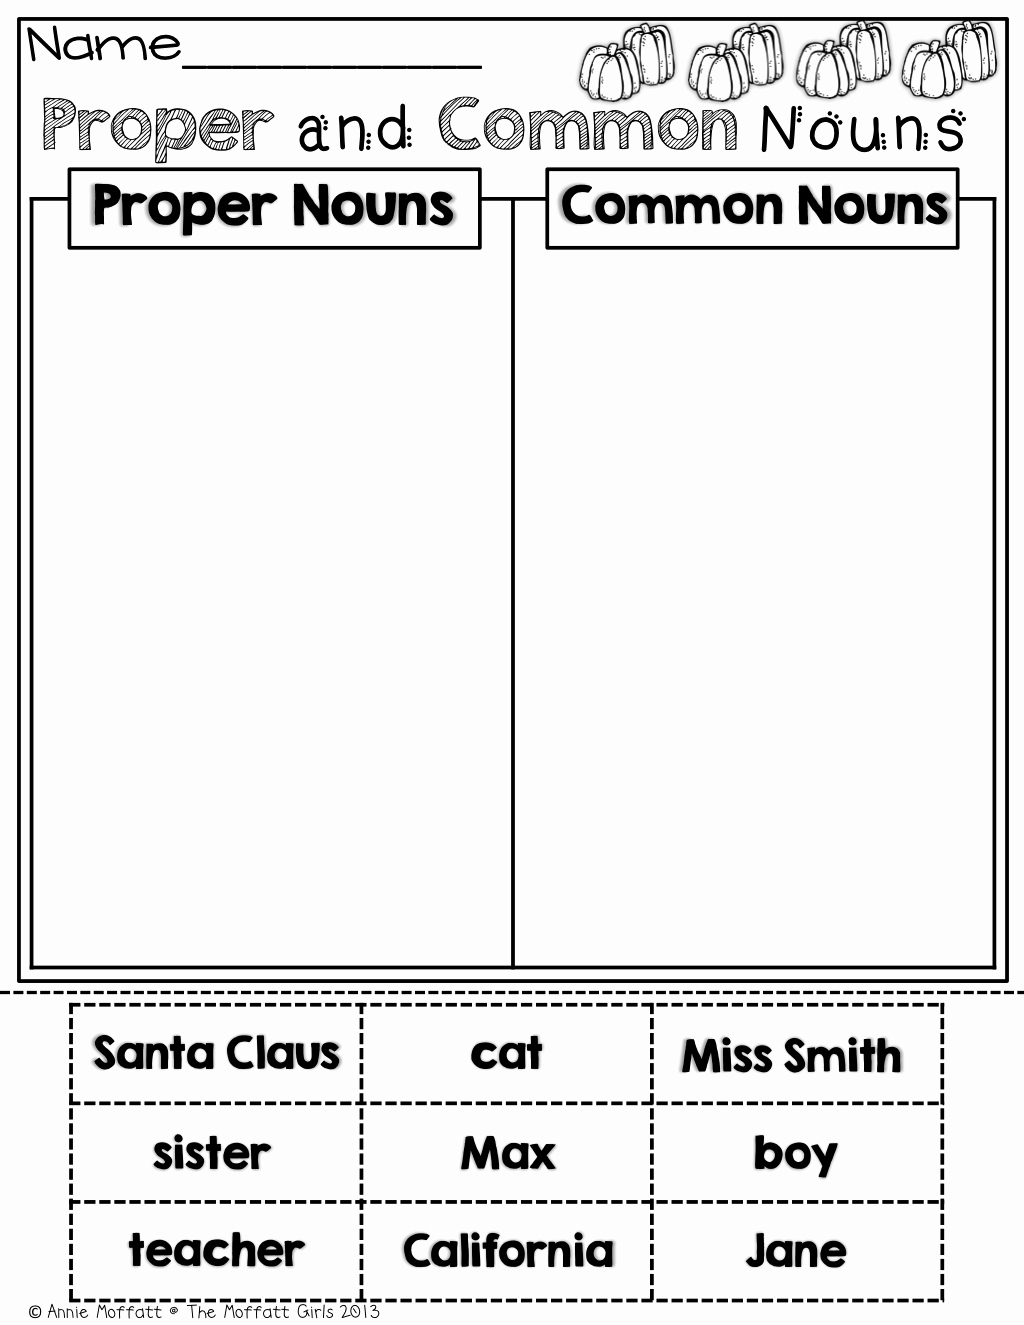 Proper Nouns Worksheet 2nd Grade Inspirational Proper and Mon Nouns Cut and Paste